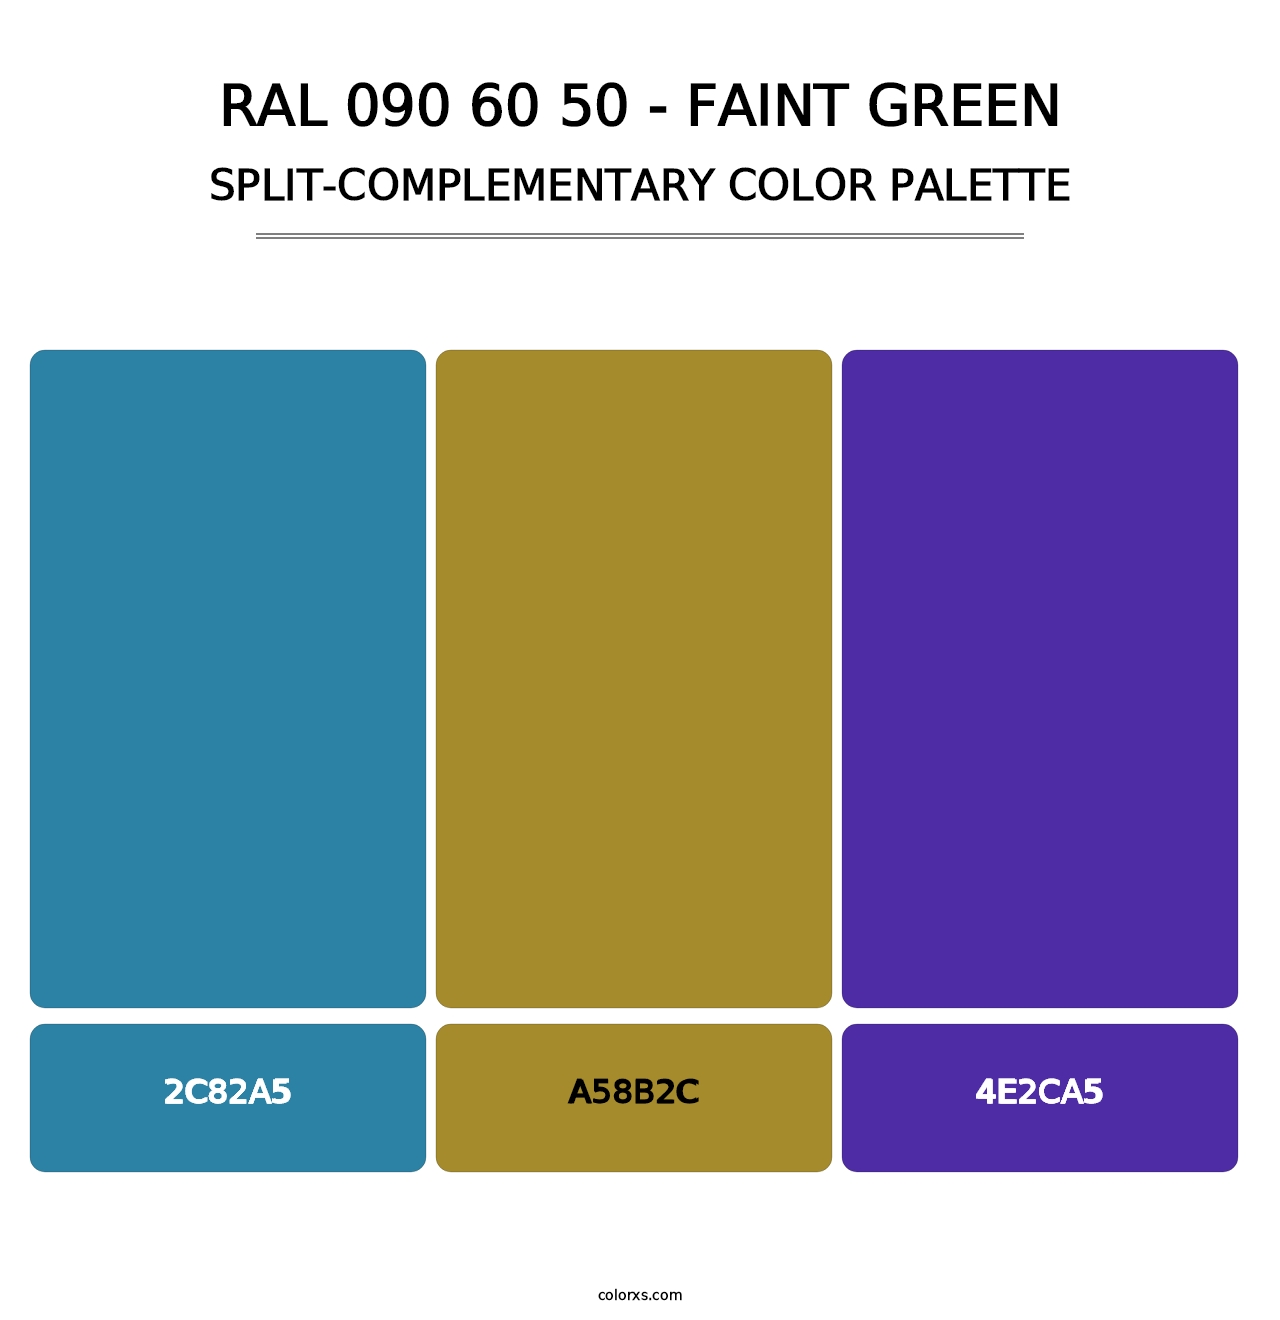 RAL 090 60 50 - Faint Green - Split-Complementary Color Palette